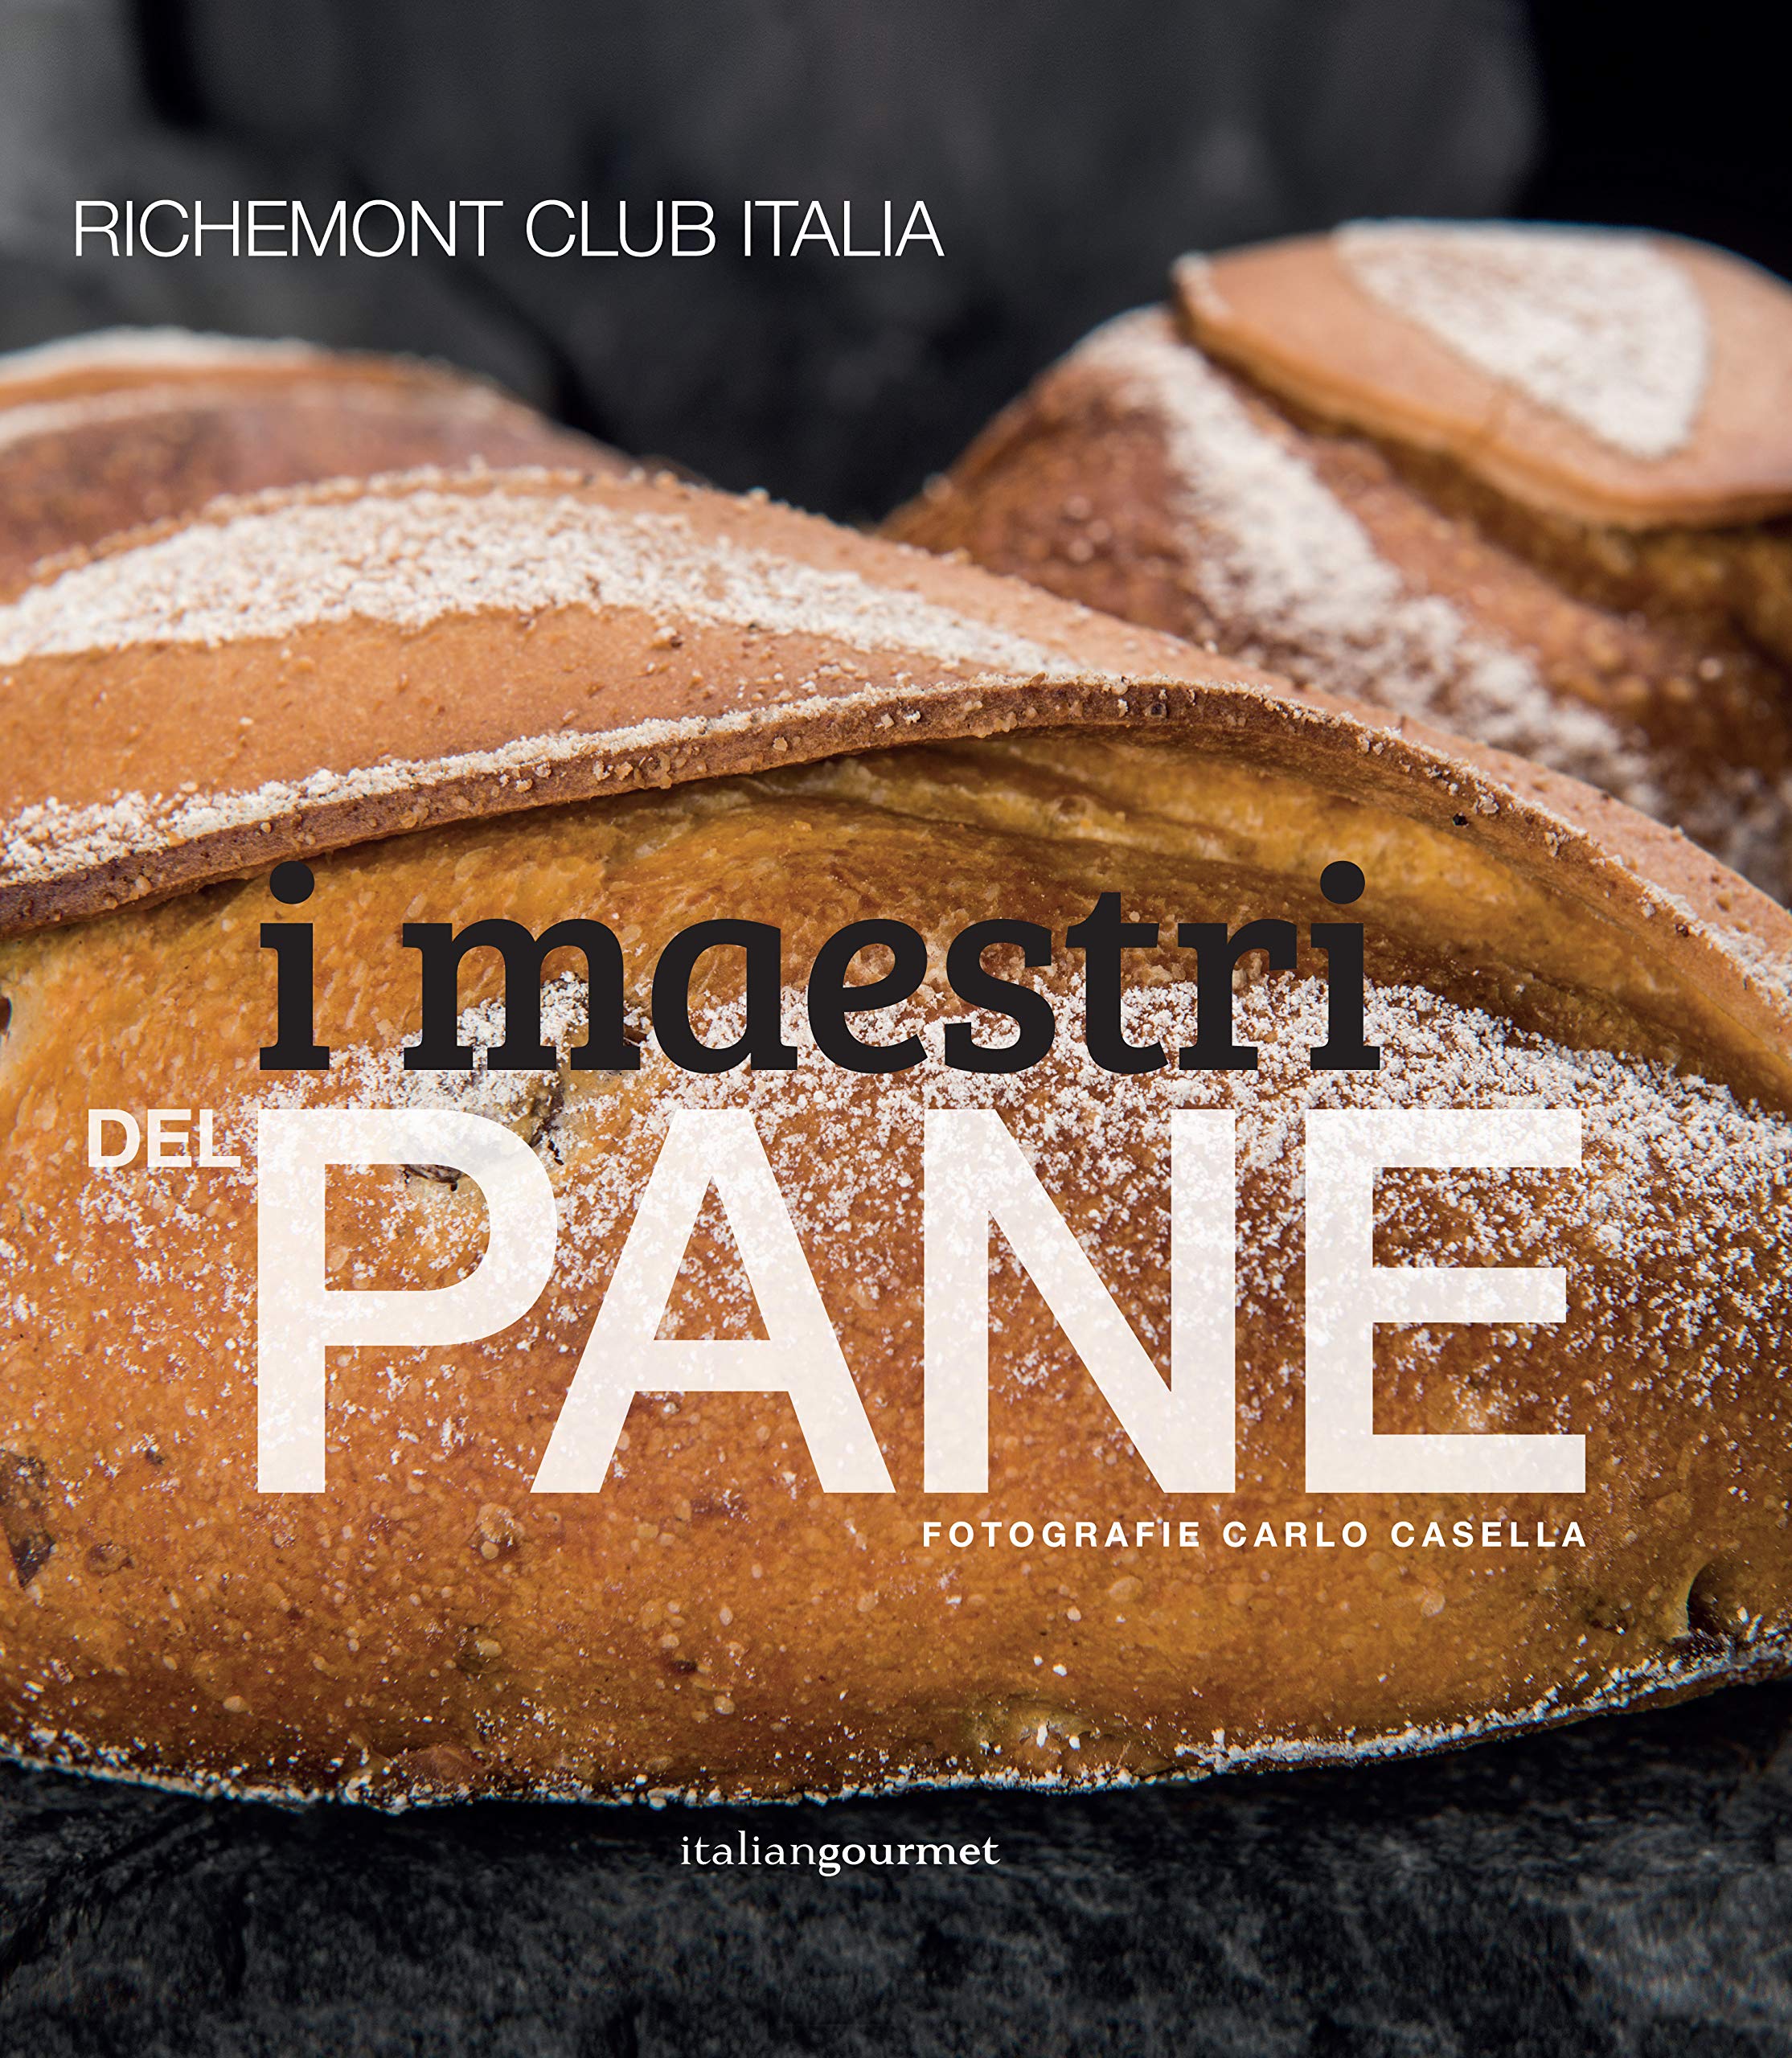 I maestri del pane (Richemont Club Italia)